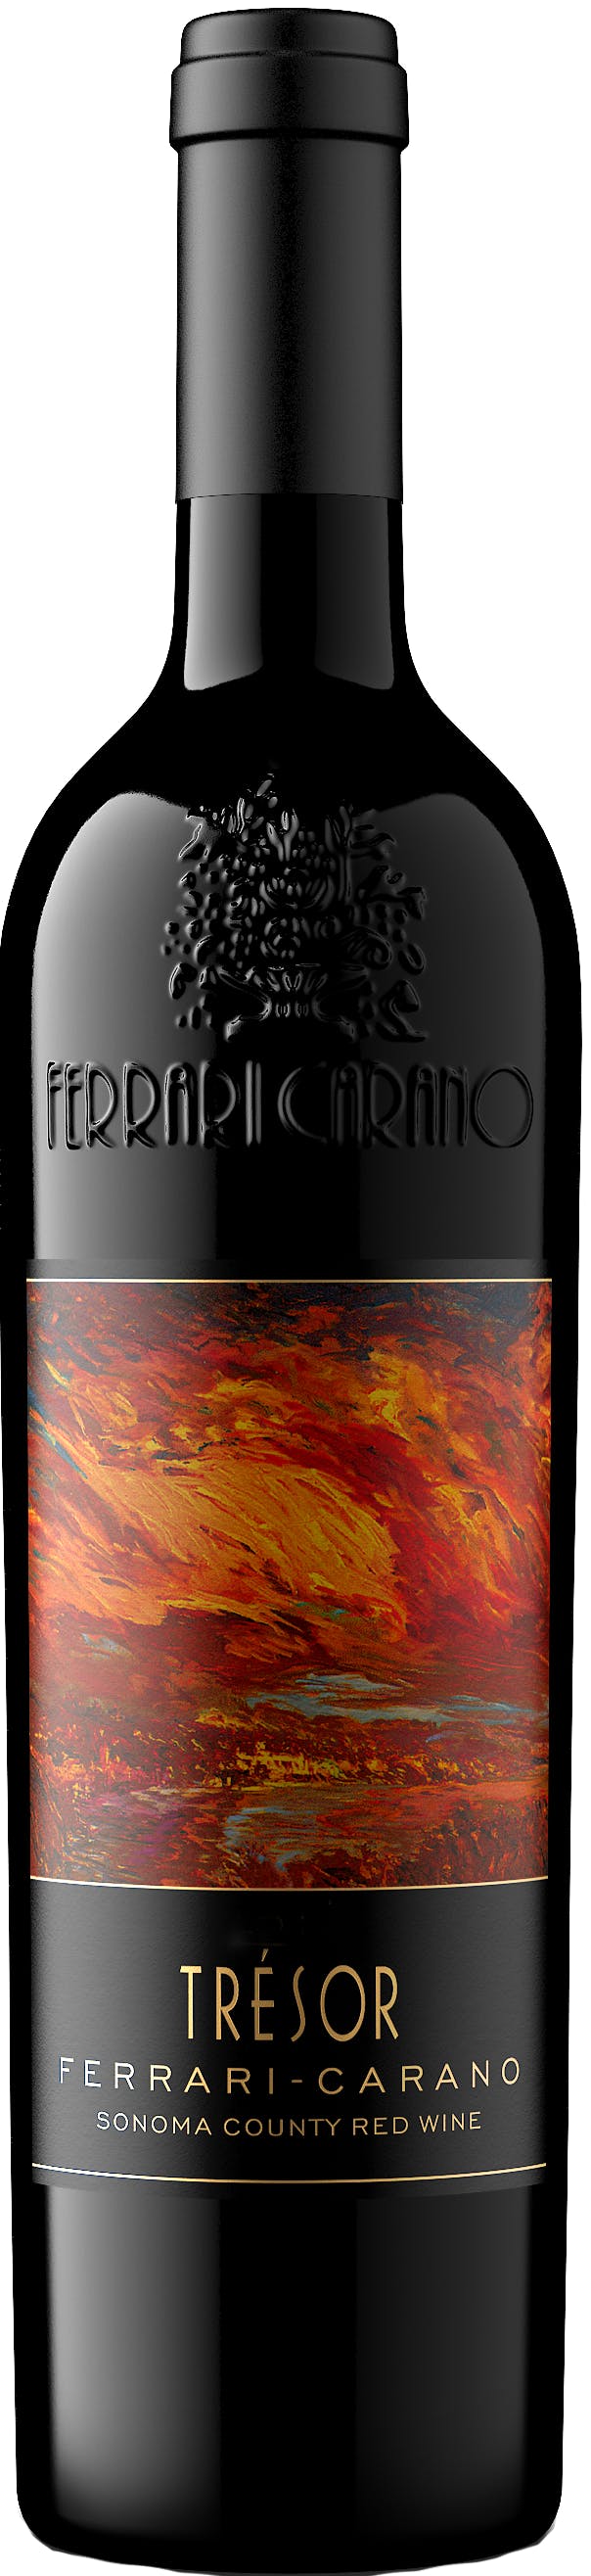 Ferrari Carano Tresor Star Liquor Wine